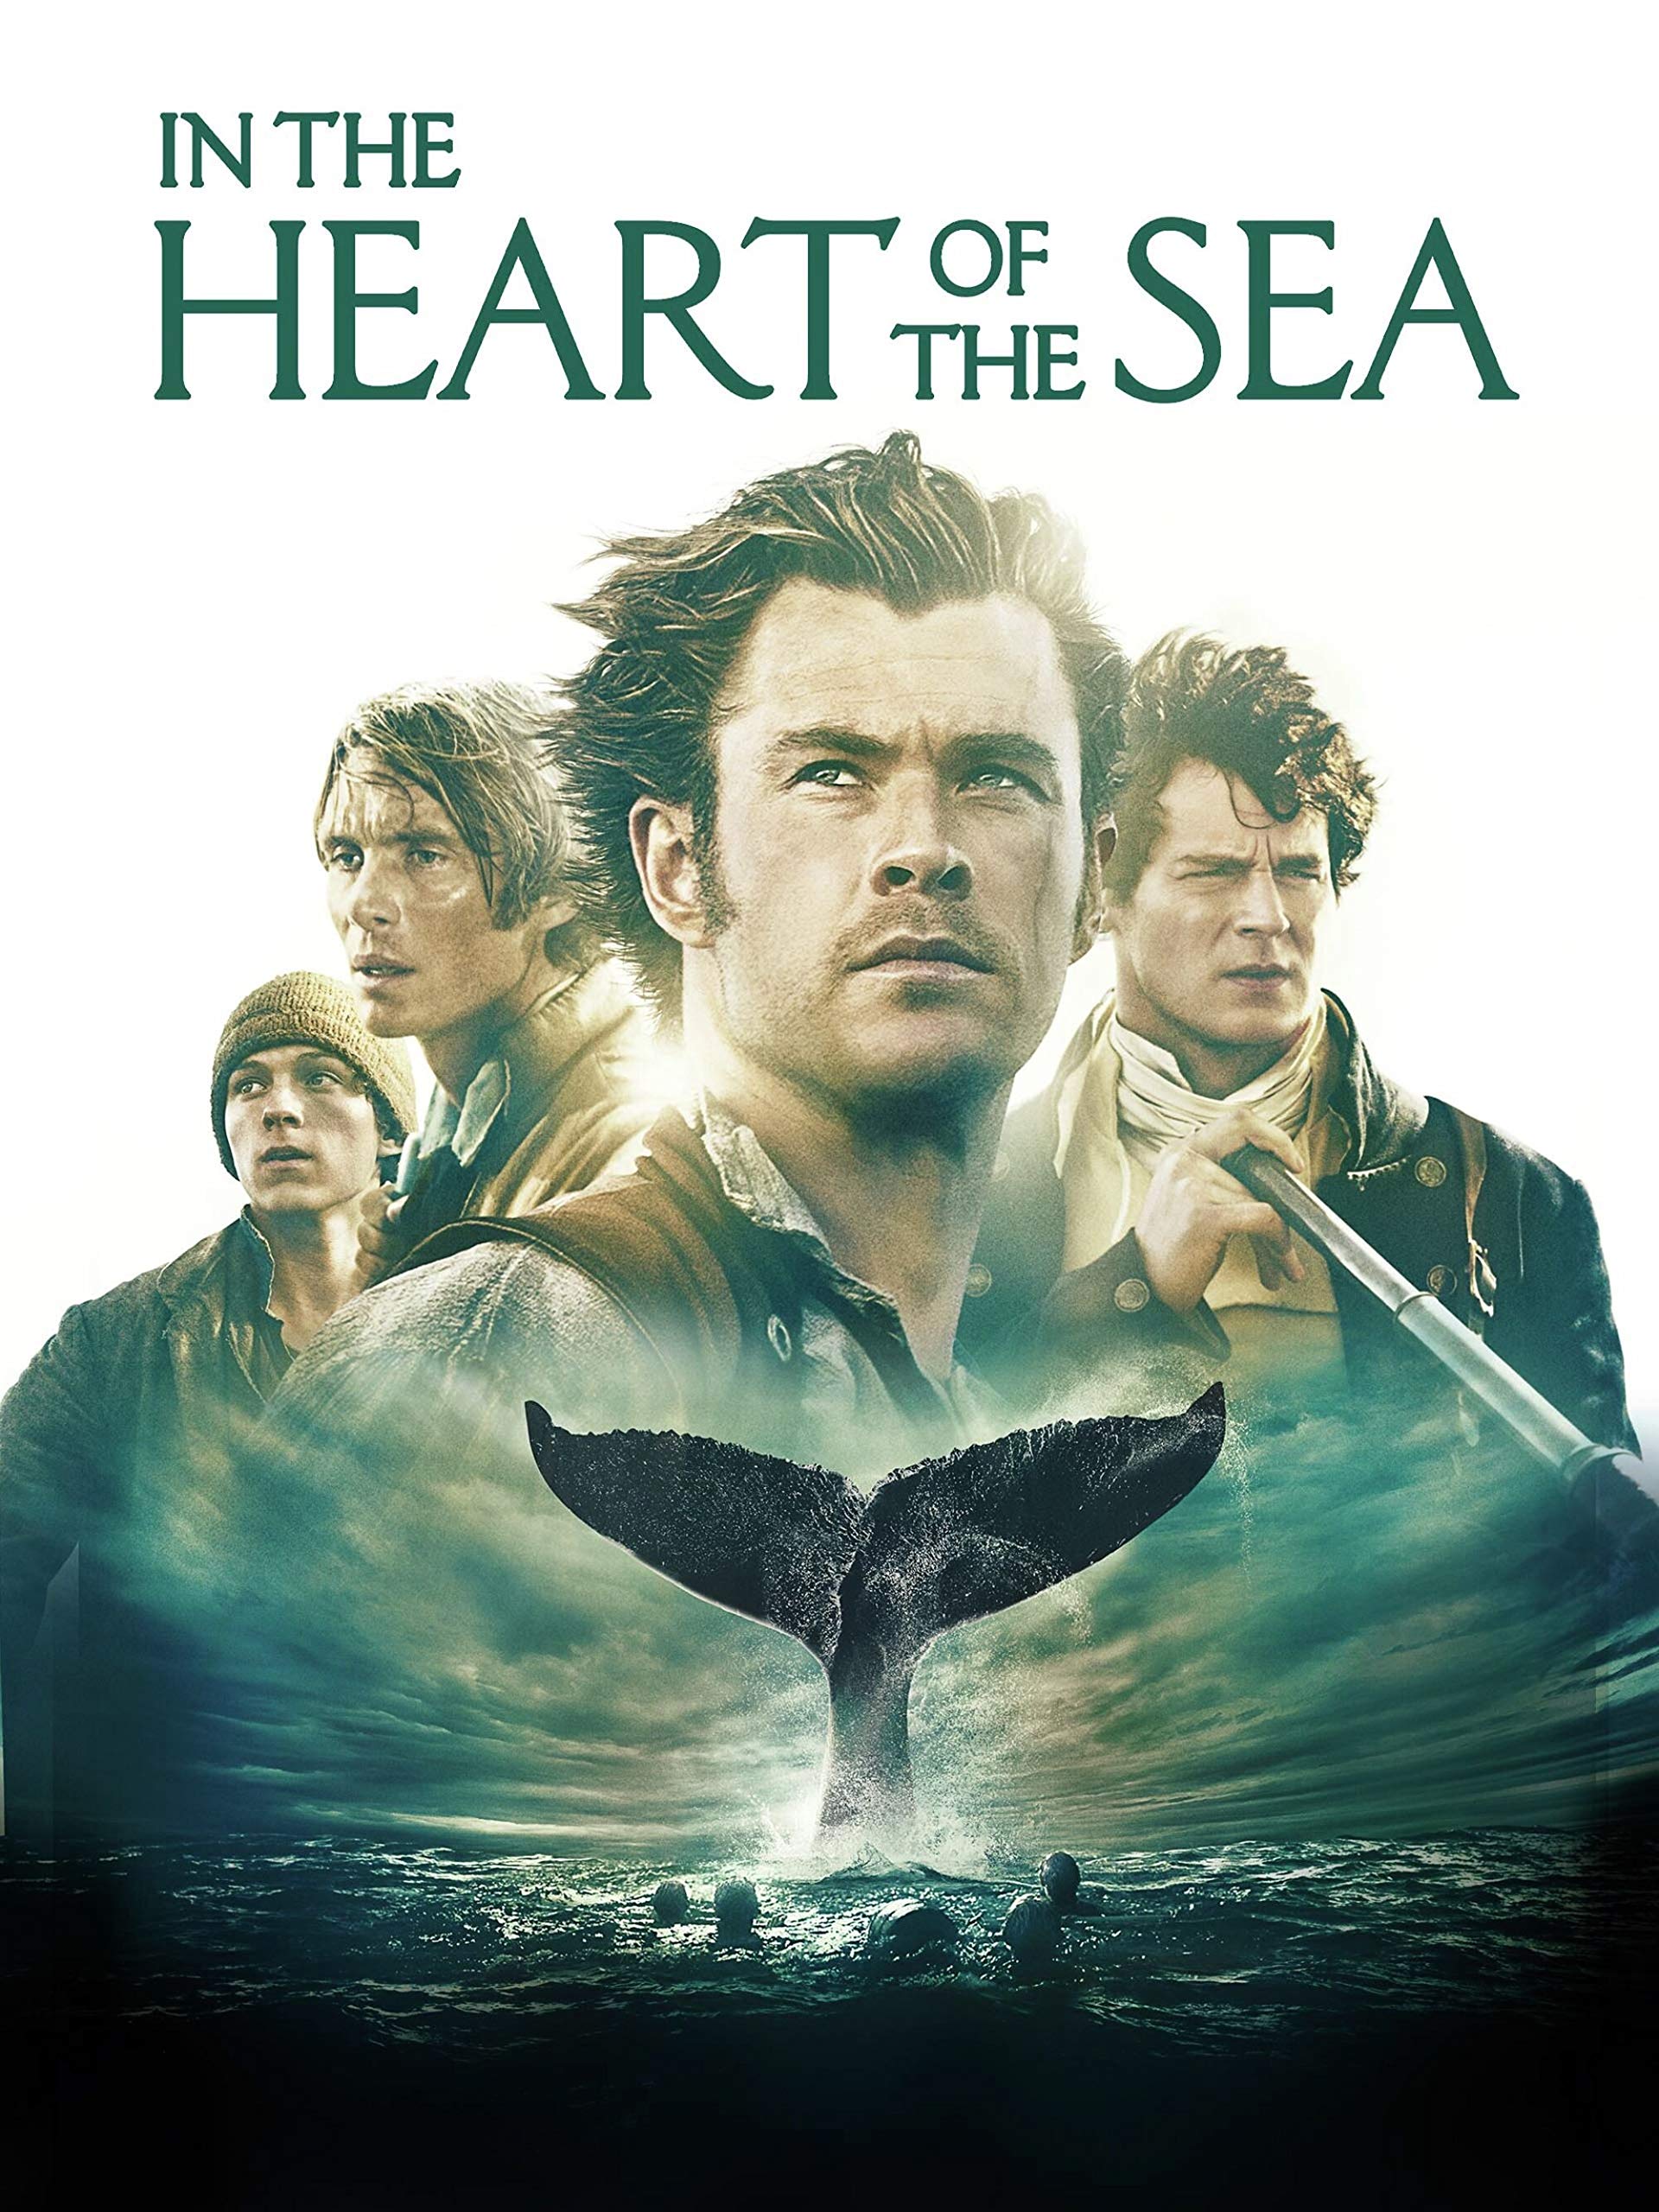 In the Heart of the Sea (film) - Wikipedia